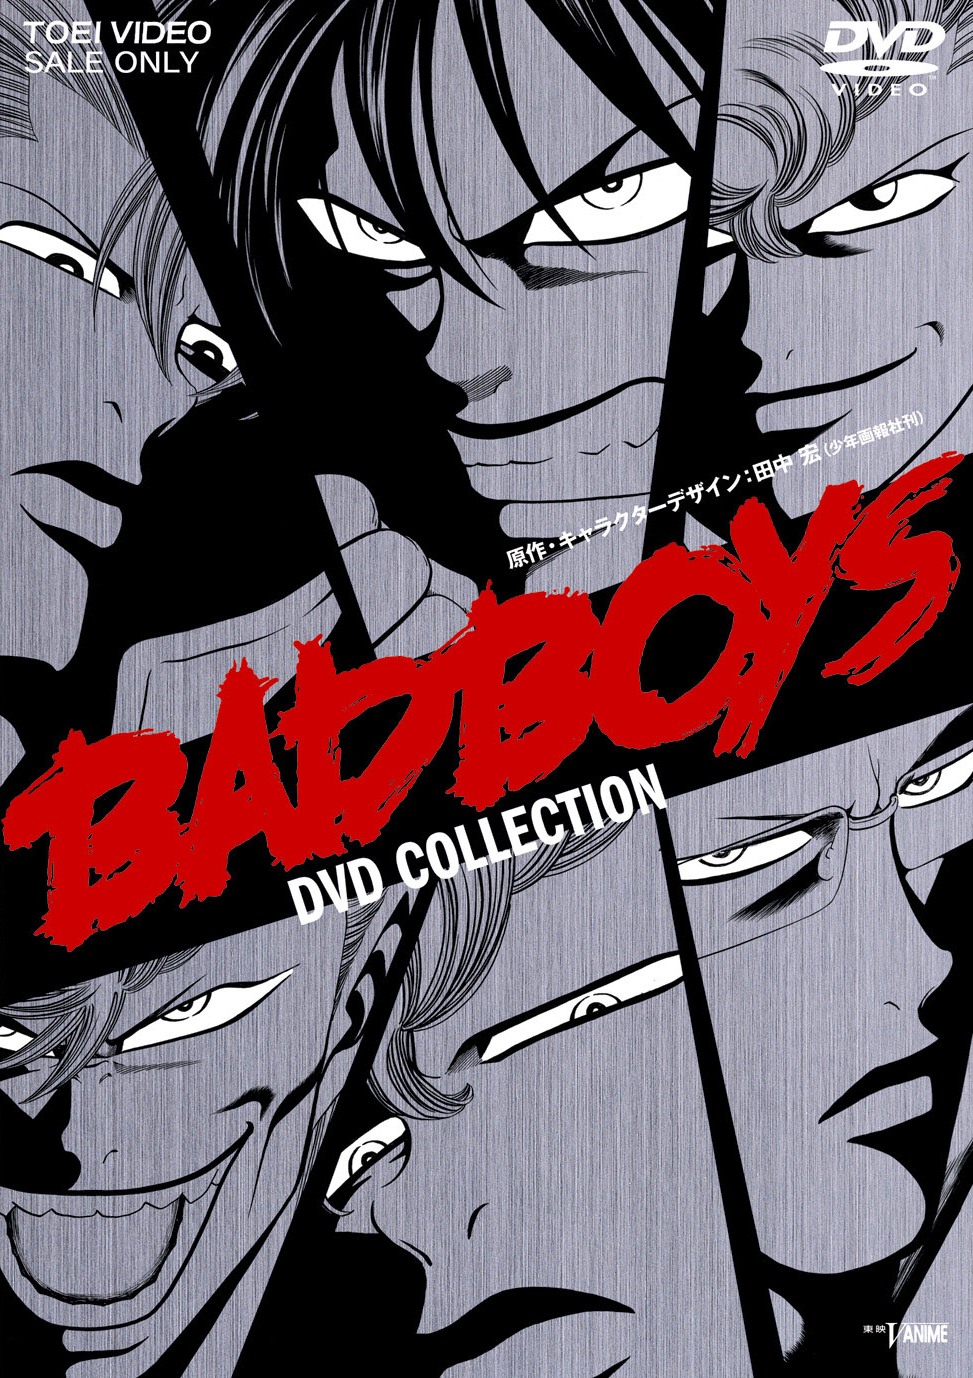 BADBOYS DVDコレクション | 東映ビデオ オンラインショップ | 商品一覧